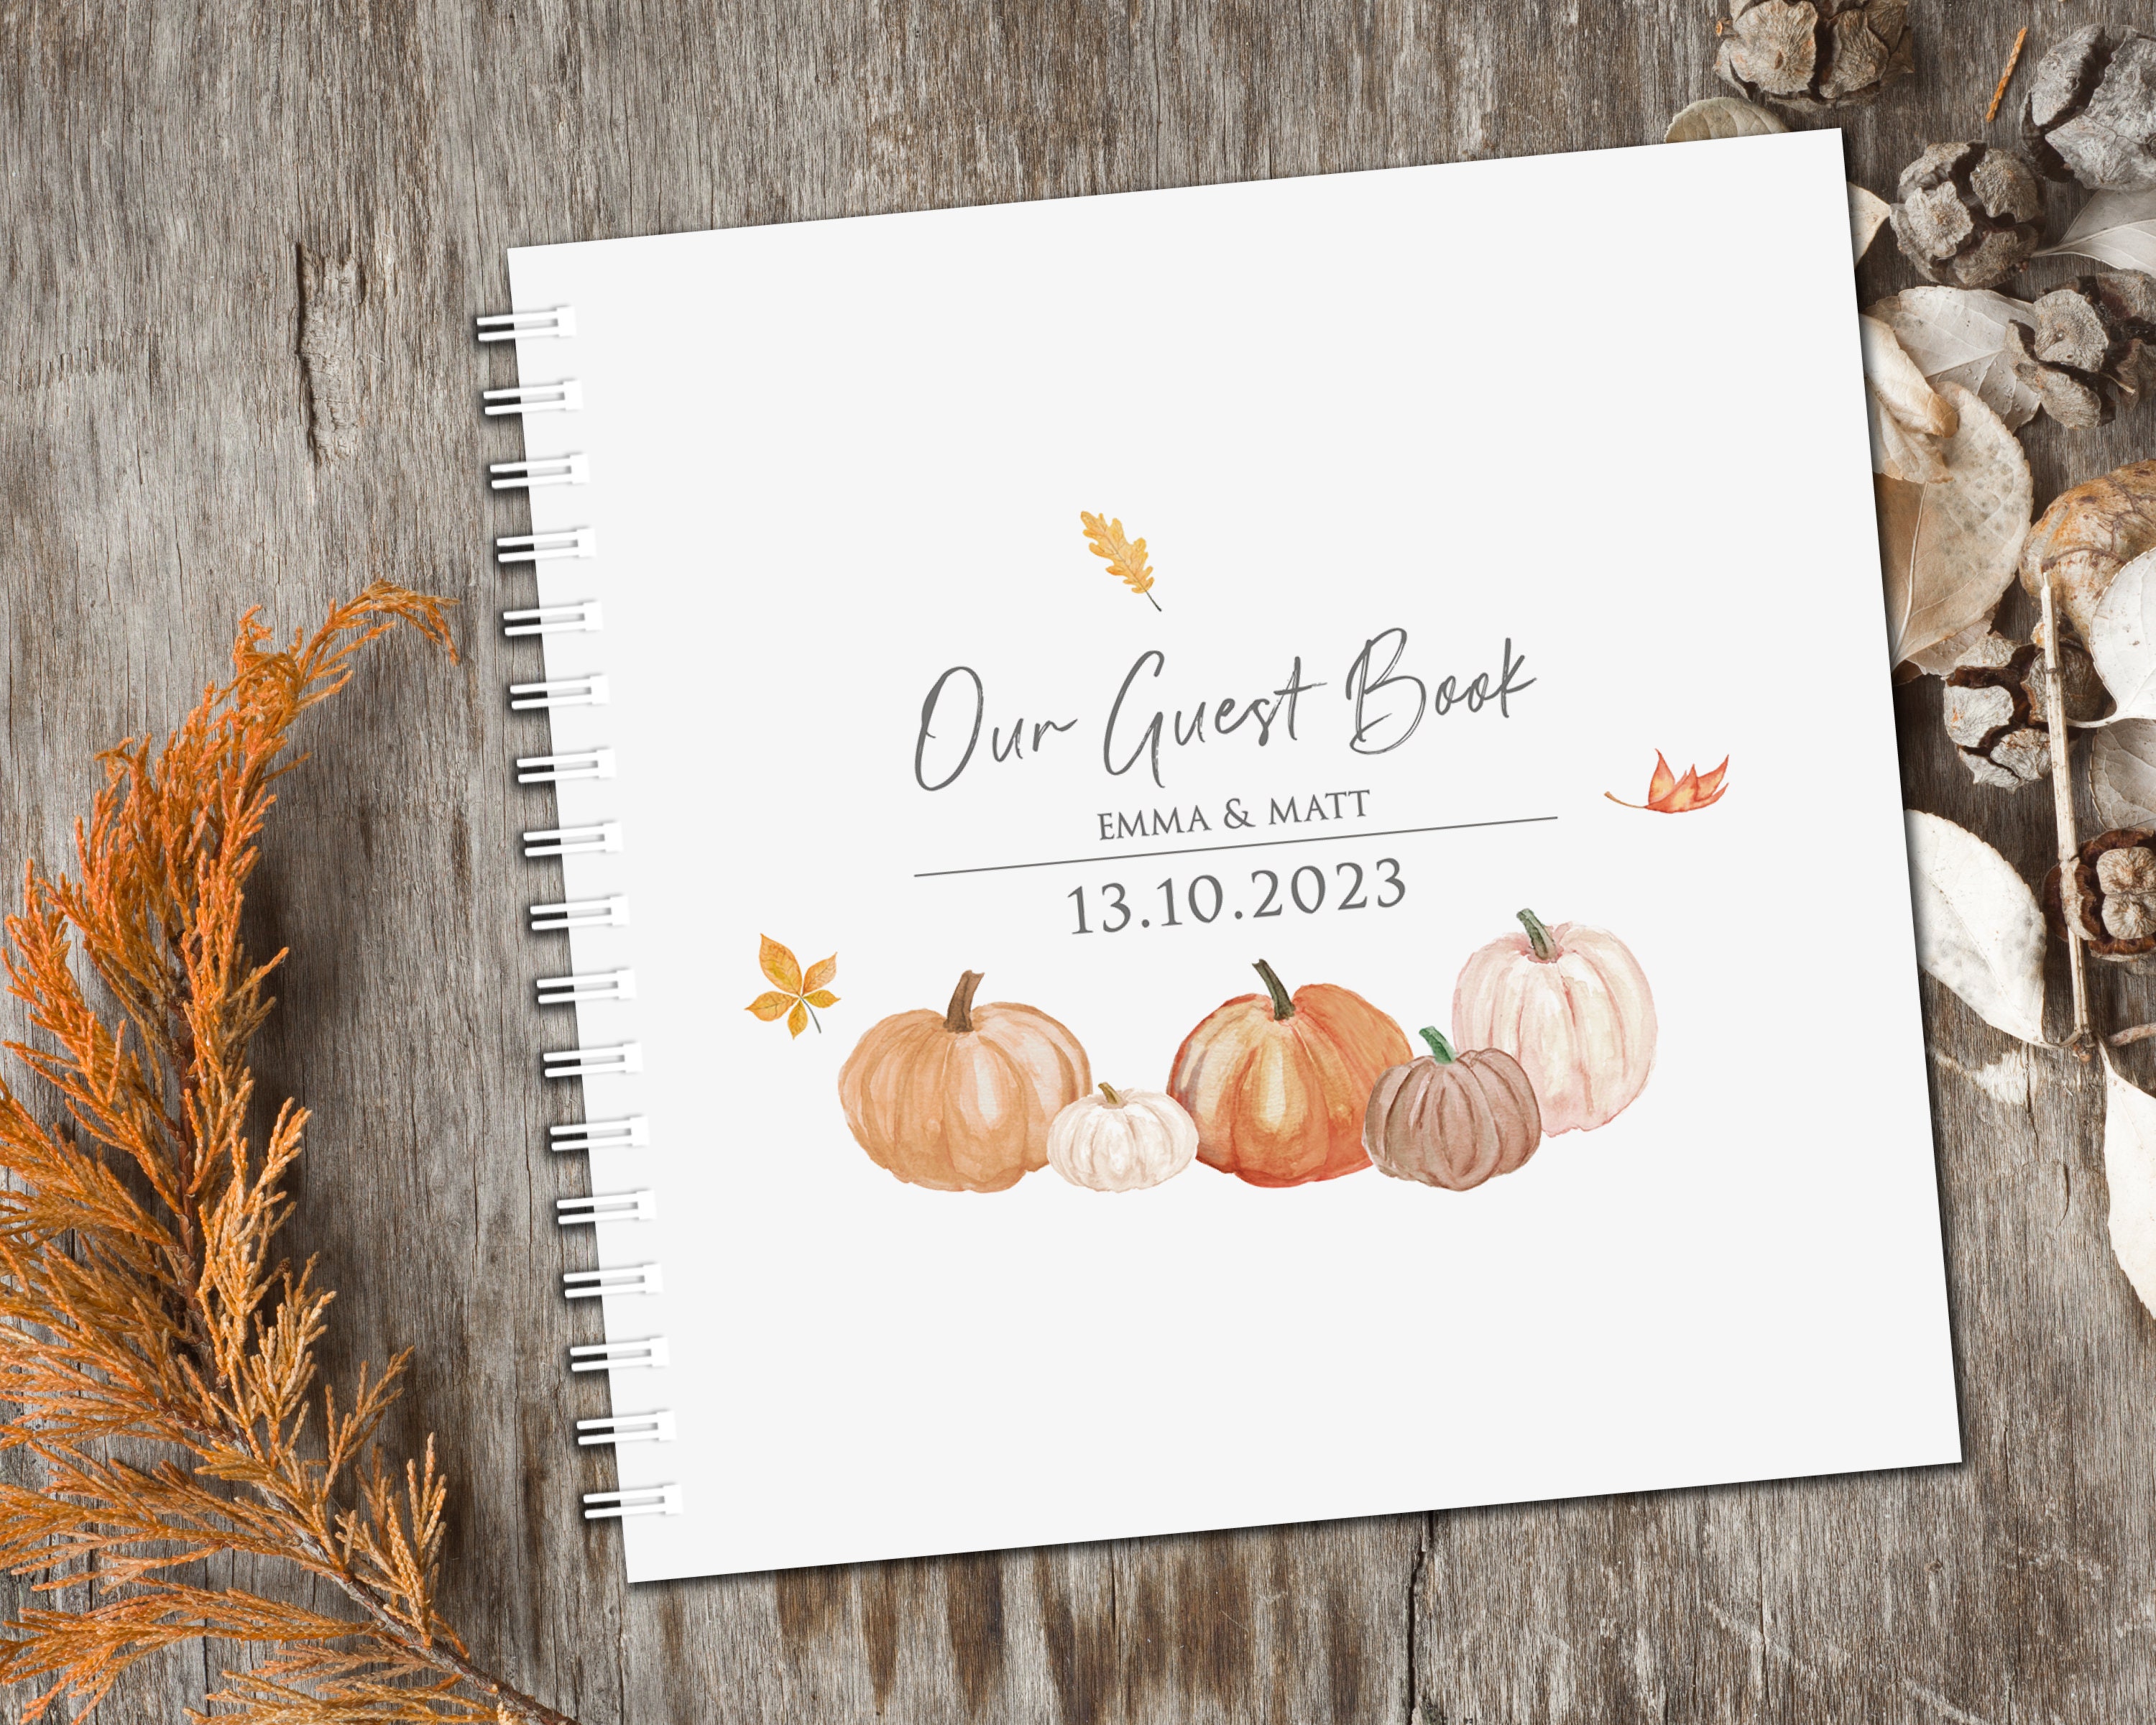 Fall Wedding Tree Drop Box Guest Book